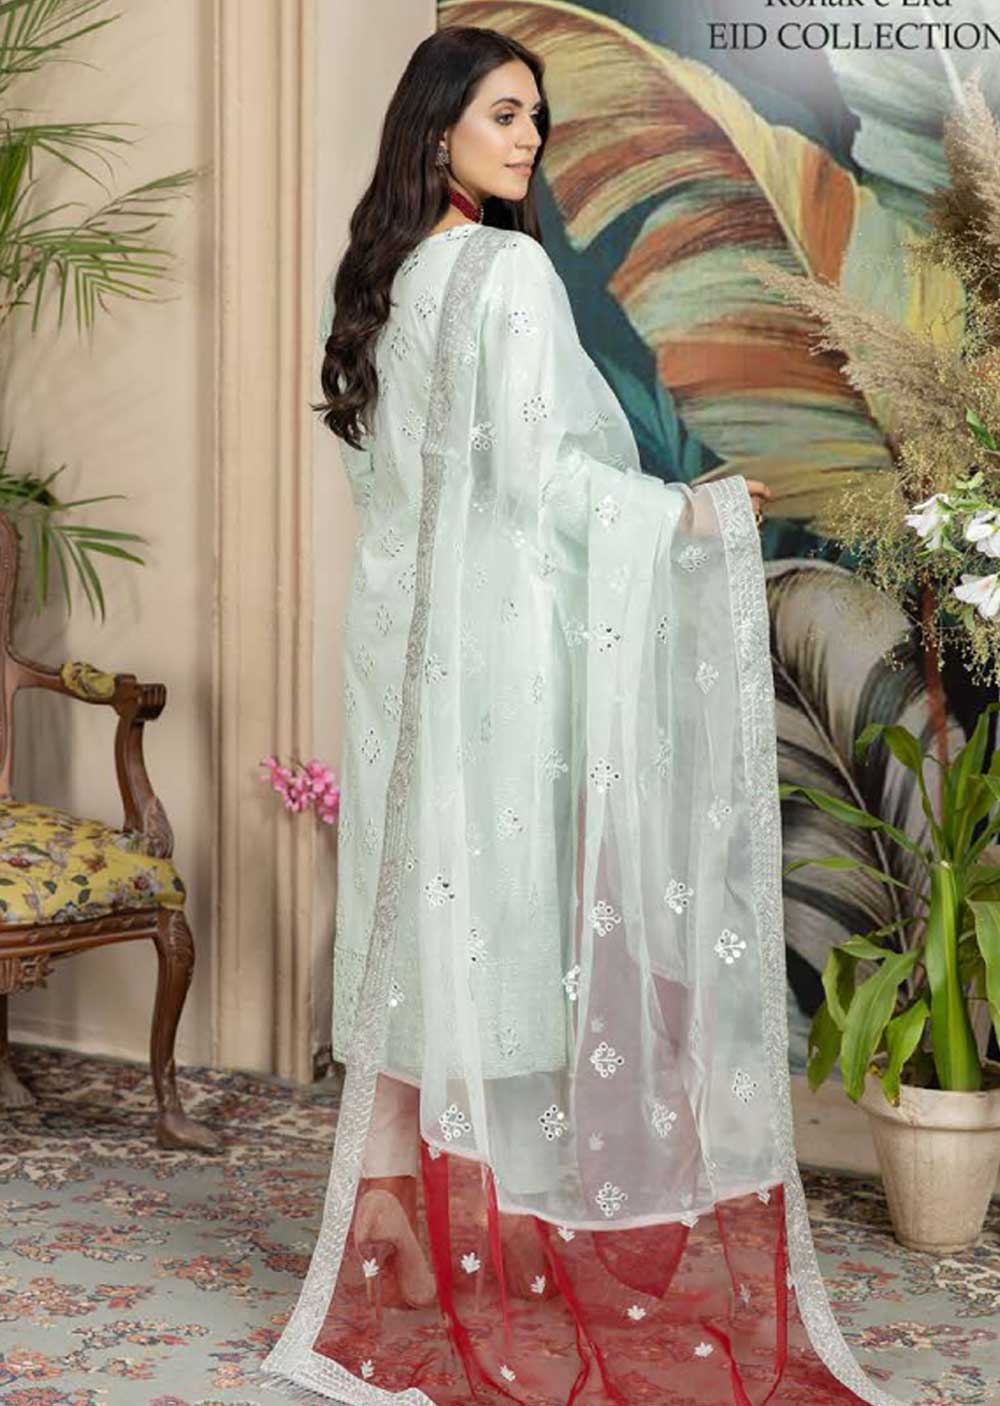 RDA-07 Readymade Ronak E Eid Mother & Daughter Suit - Memsaab Online